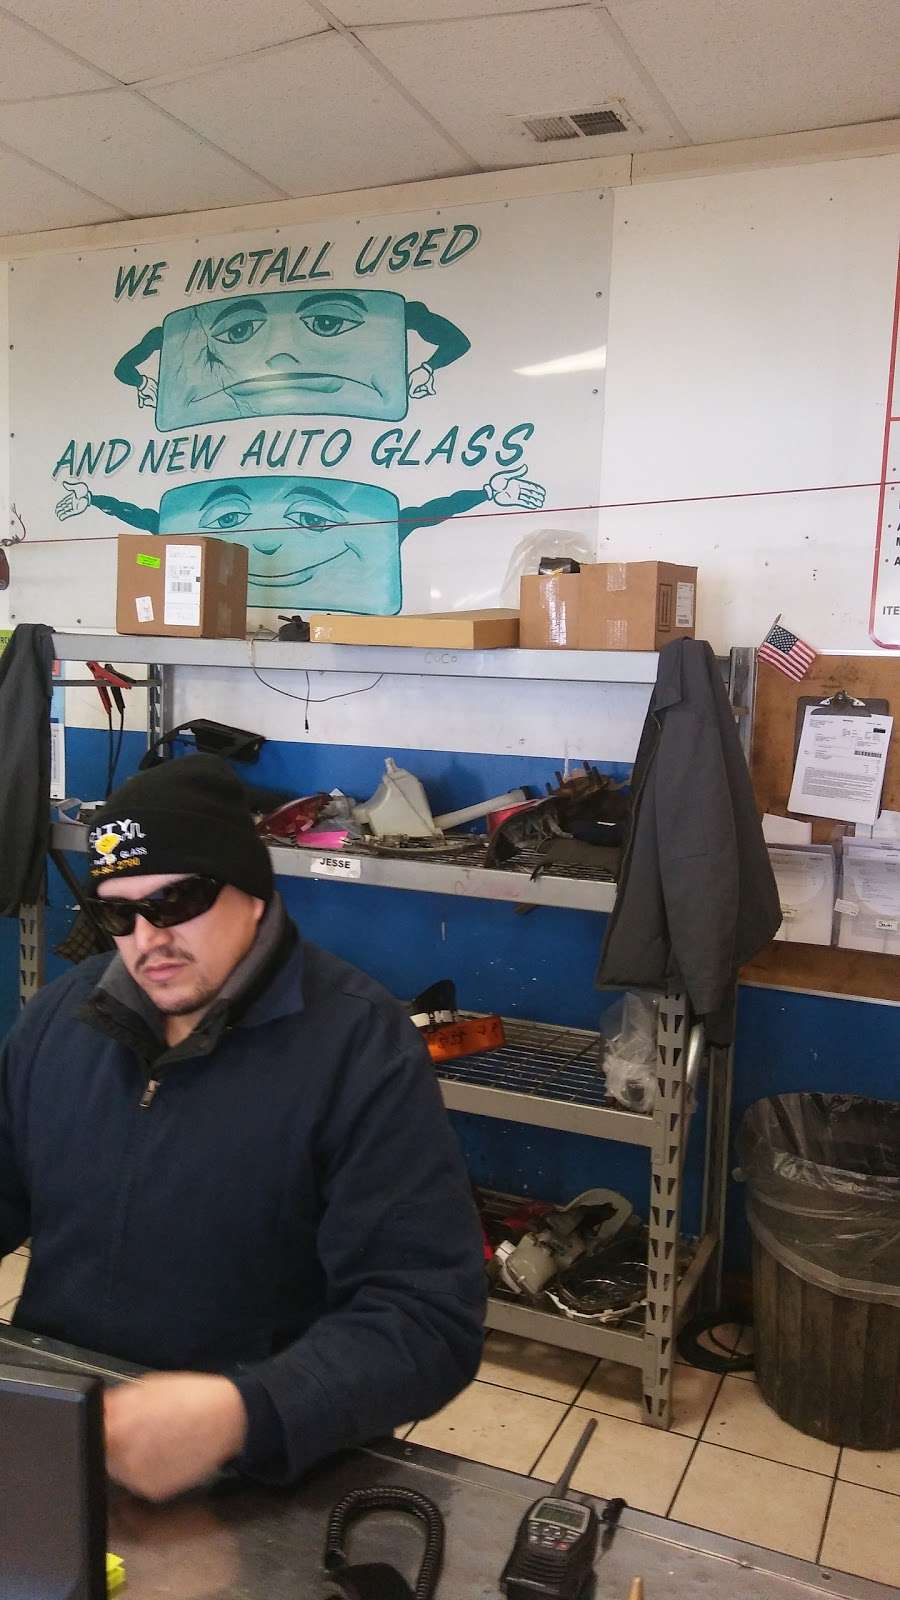 City Auto Parts & Glass | Photo 9 of 10 | Address: 1901 Dolton Rd, Calumet City, IL 60409, USA | Phone: (708) 862-2700